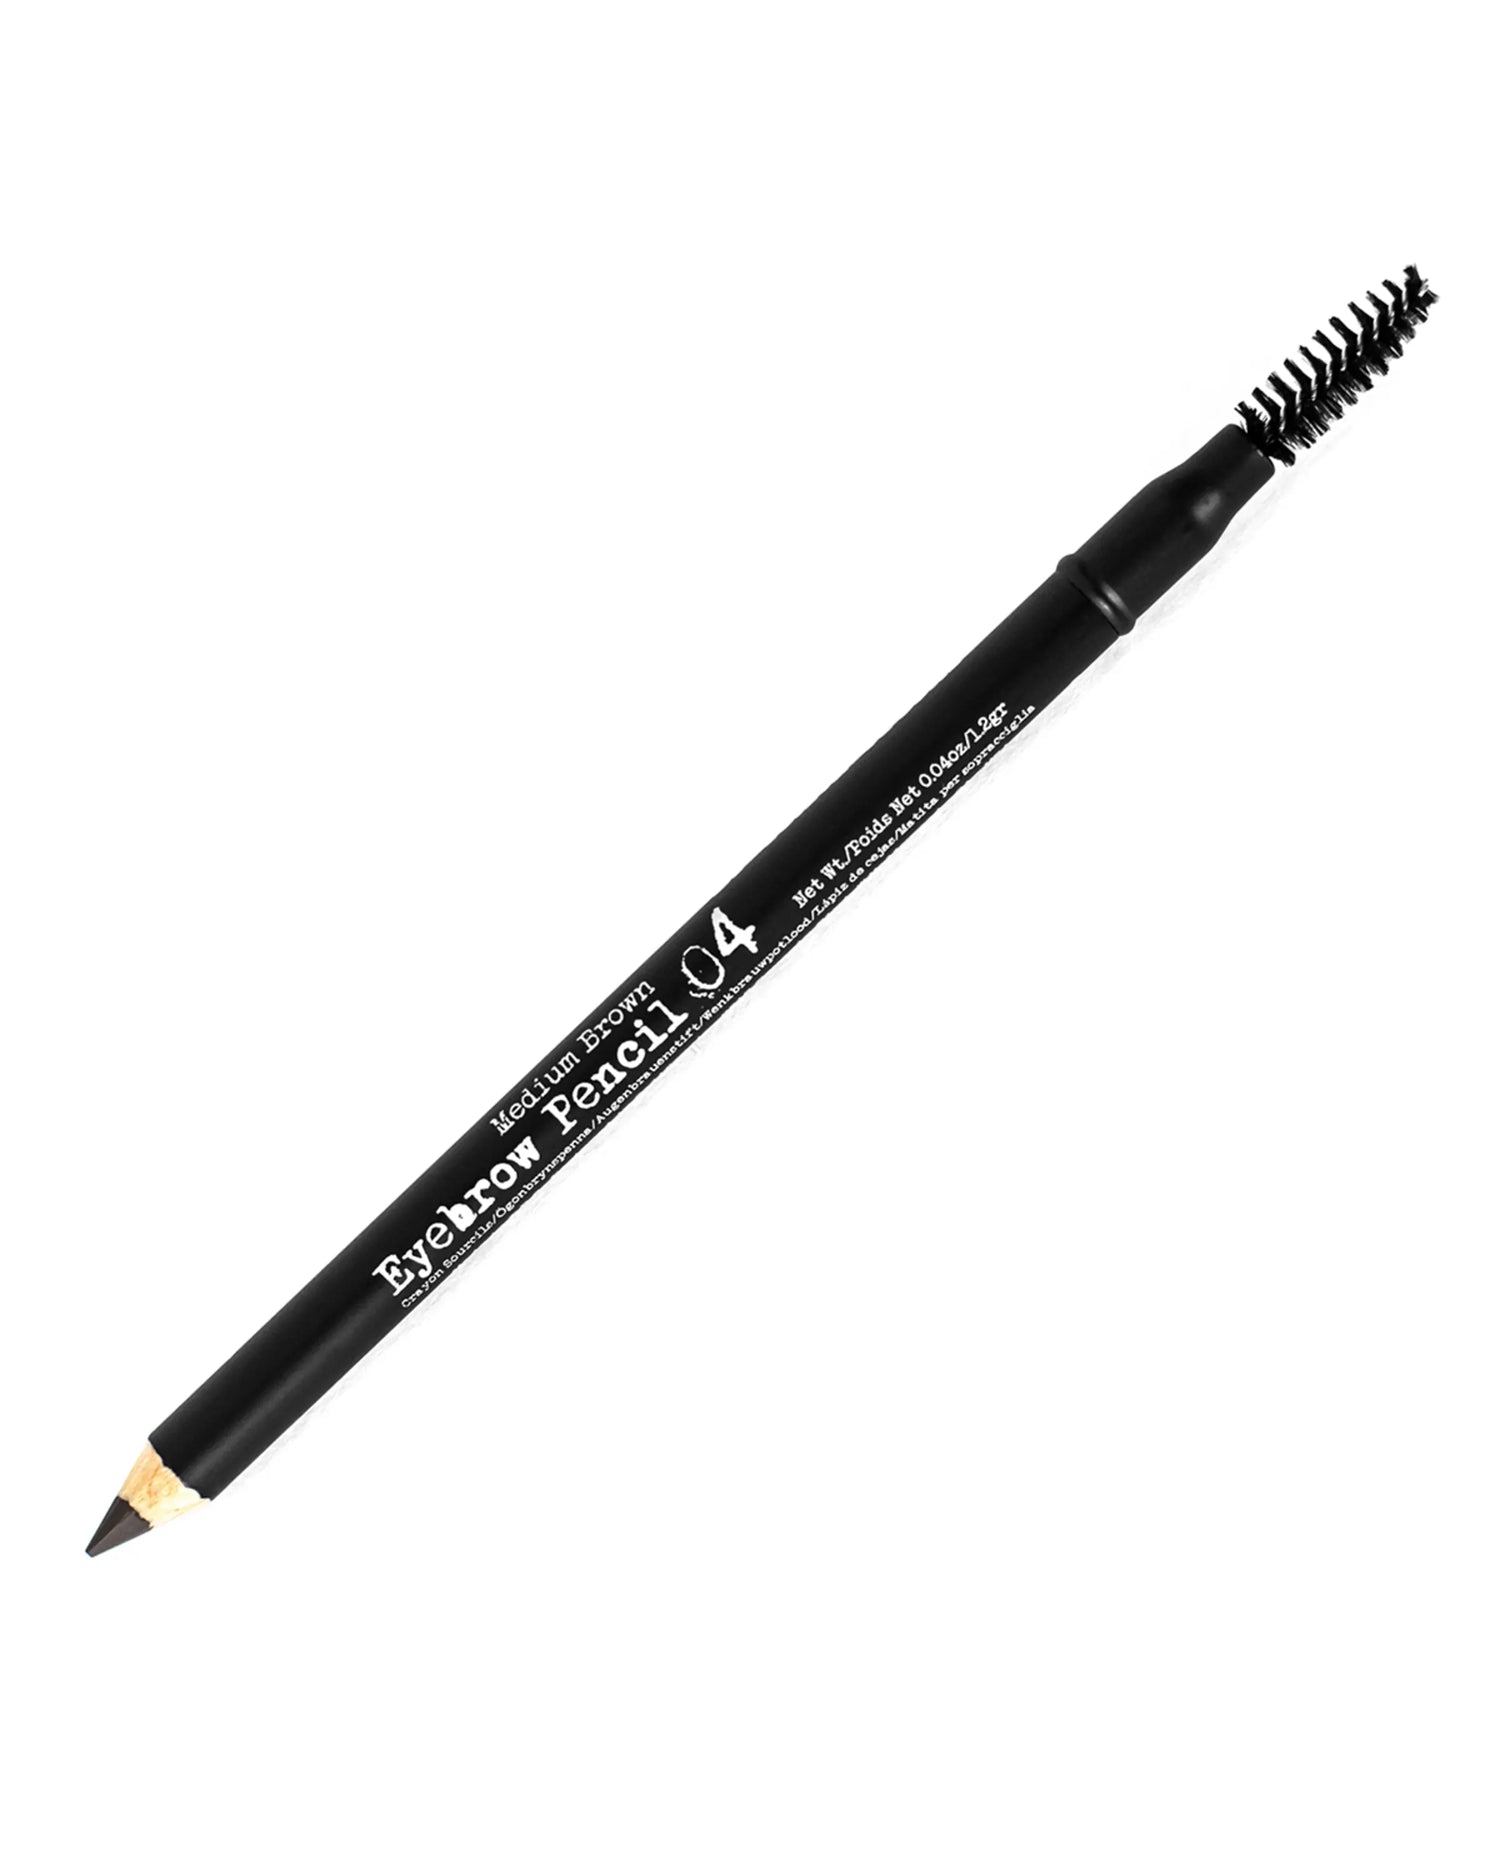 The Brow Gal Eyebrow Pencil